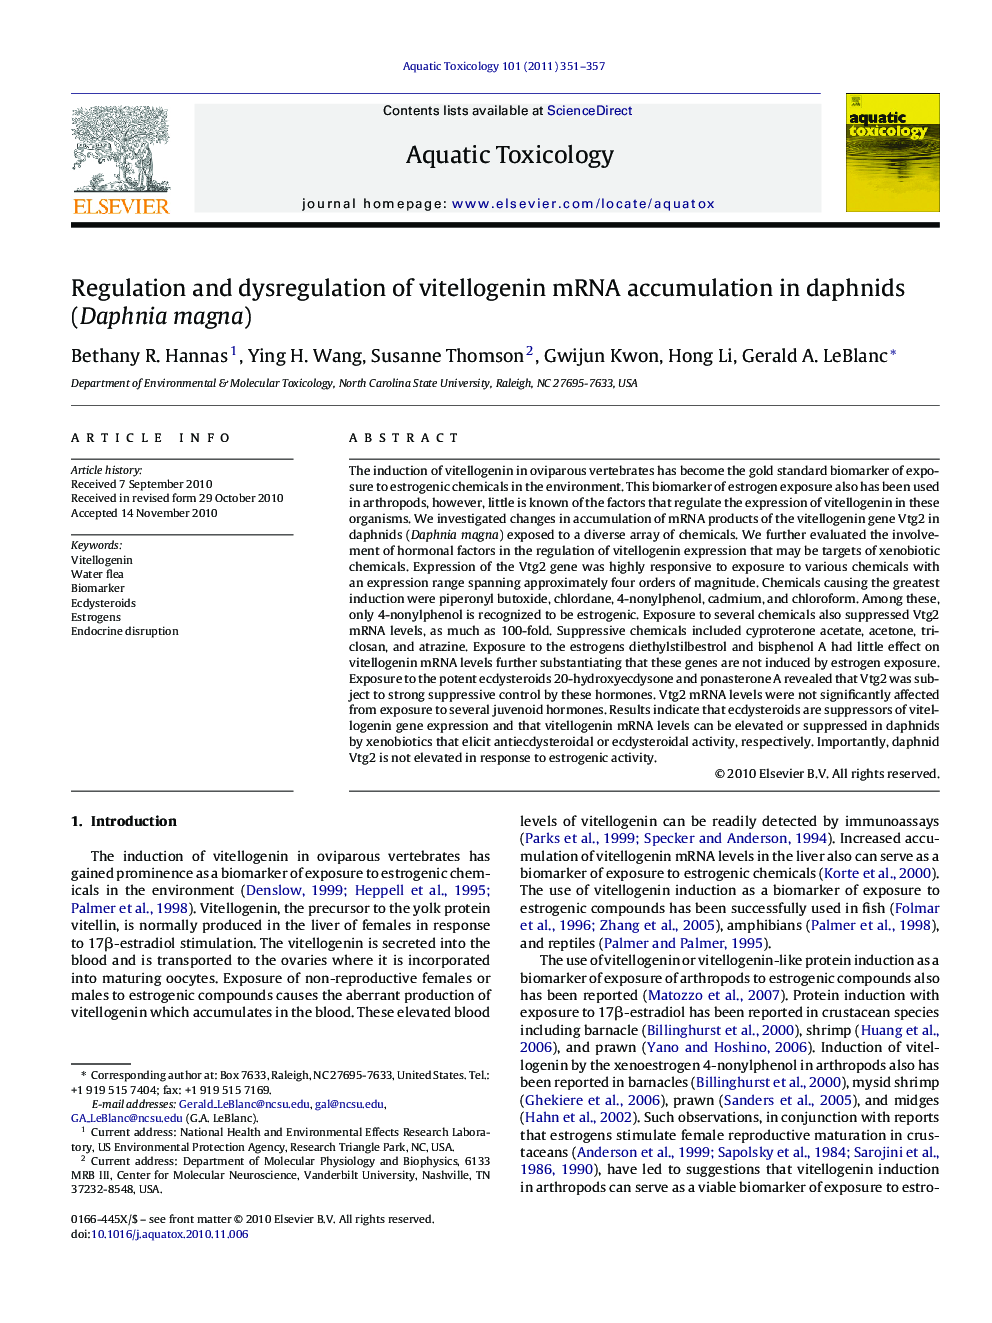 Regulation and dysregulation of vitellogenin mRNA accumulation in daphnids (Daphnia magna)